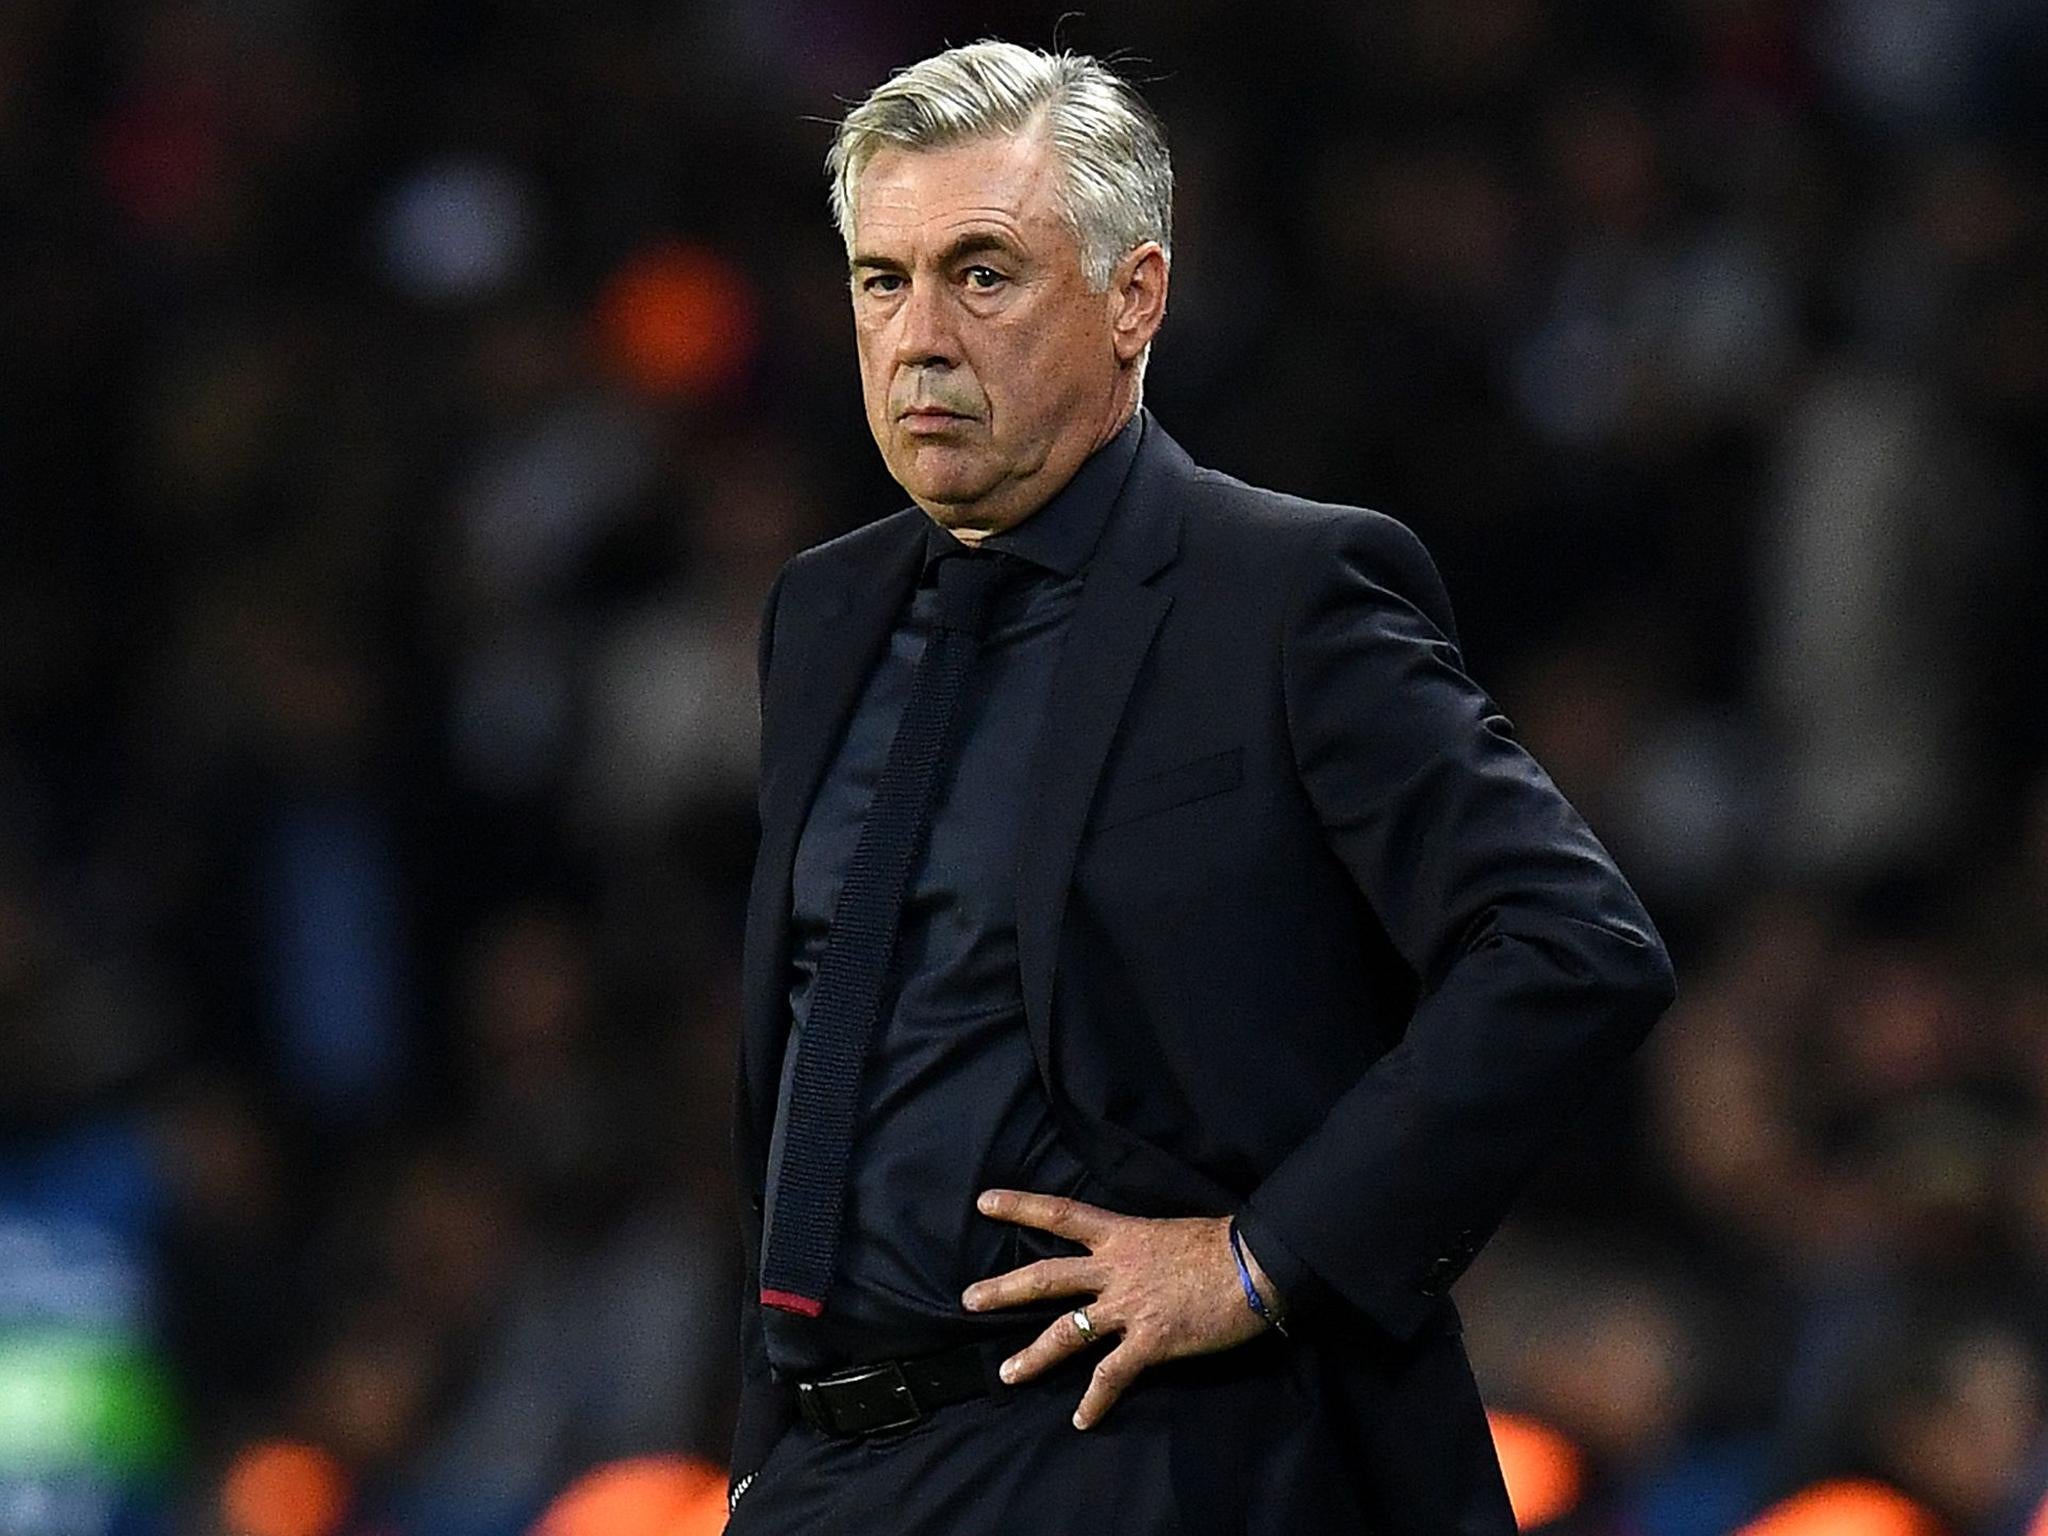 Bayern Munich are holding a crisis meeting to discuss Carlo Ancelotti's future